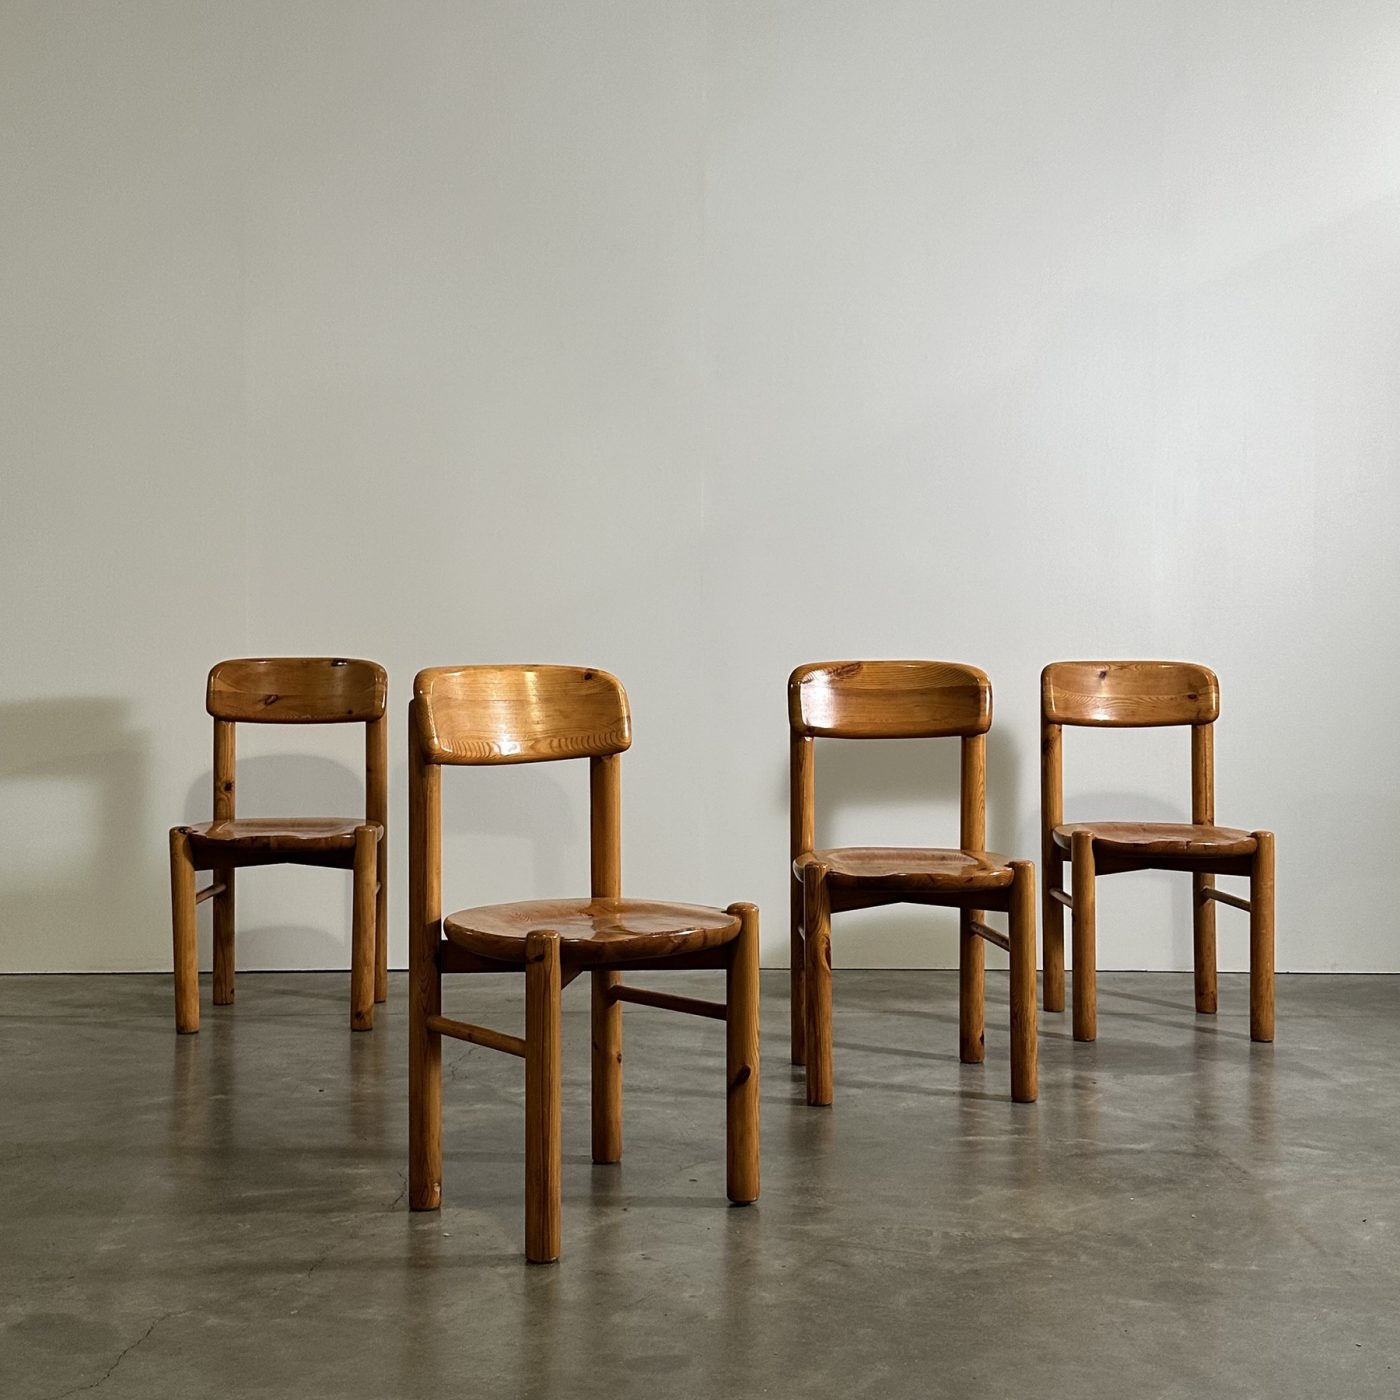 objet-vagabond-pine-chairs0003